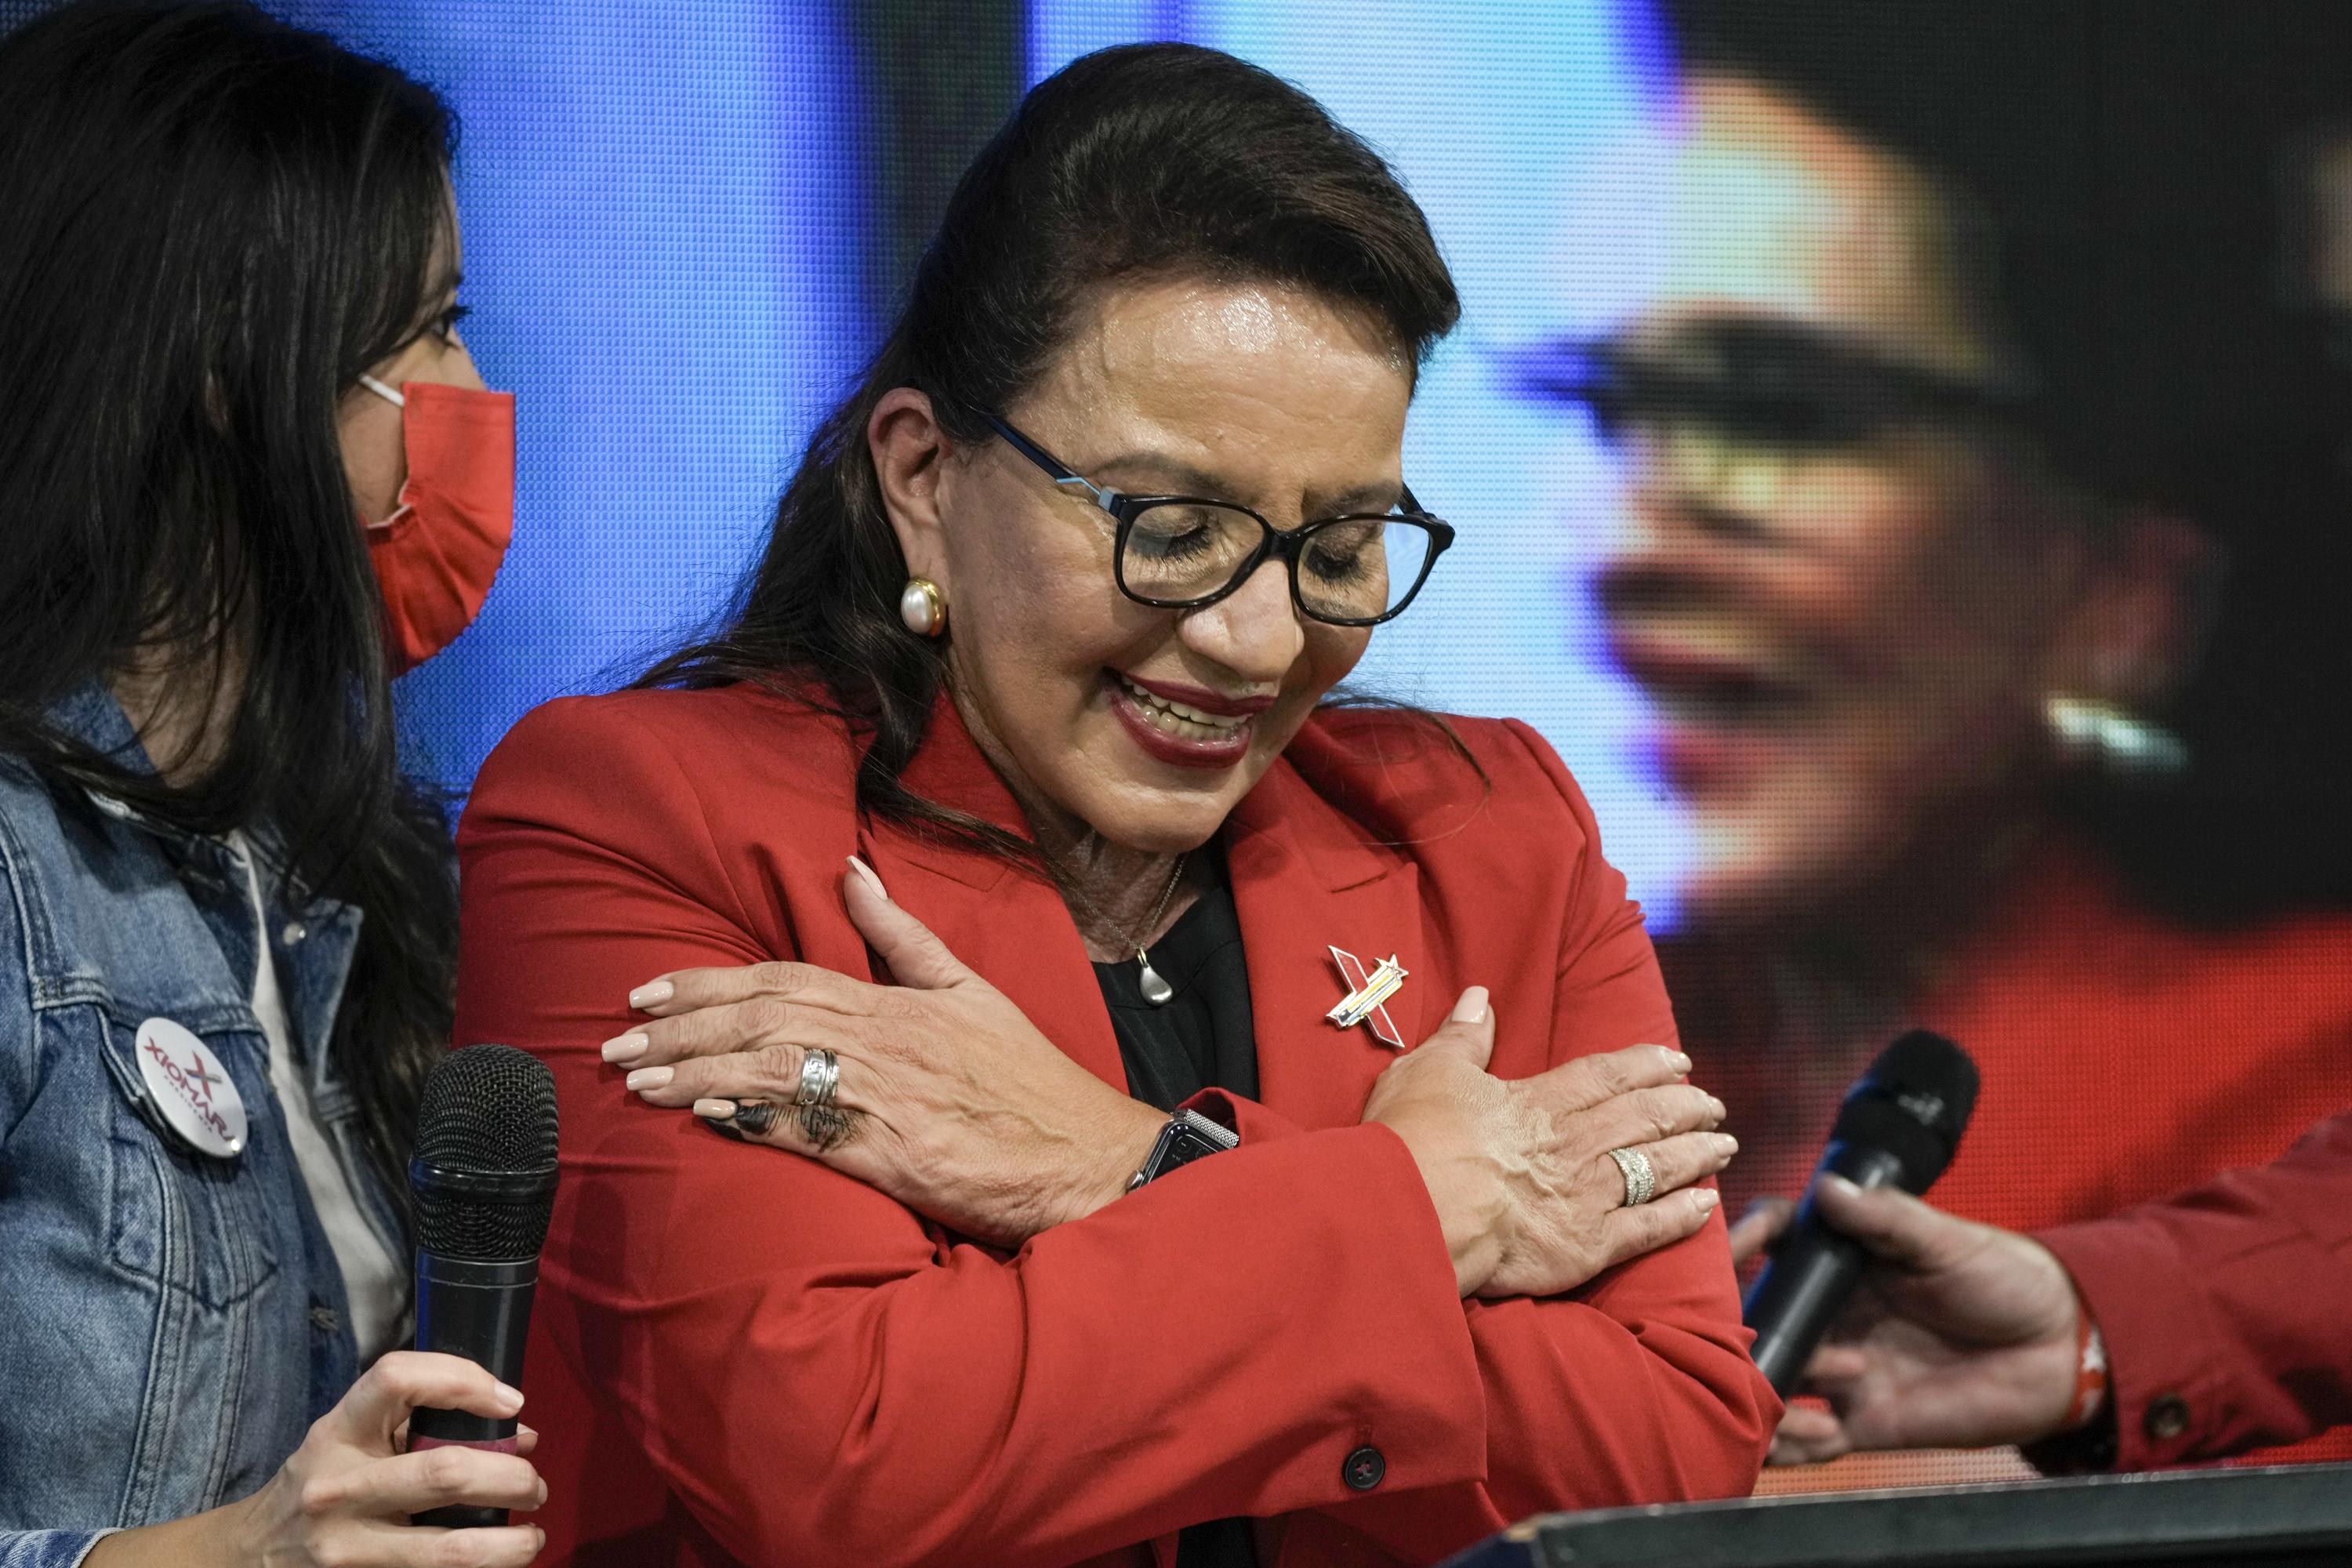 honduras-leftist-leader-could-present-opportunities-for-us-ap-news